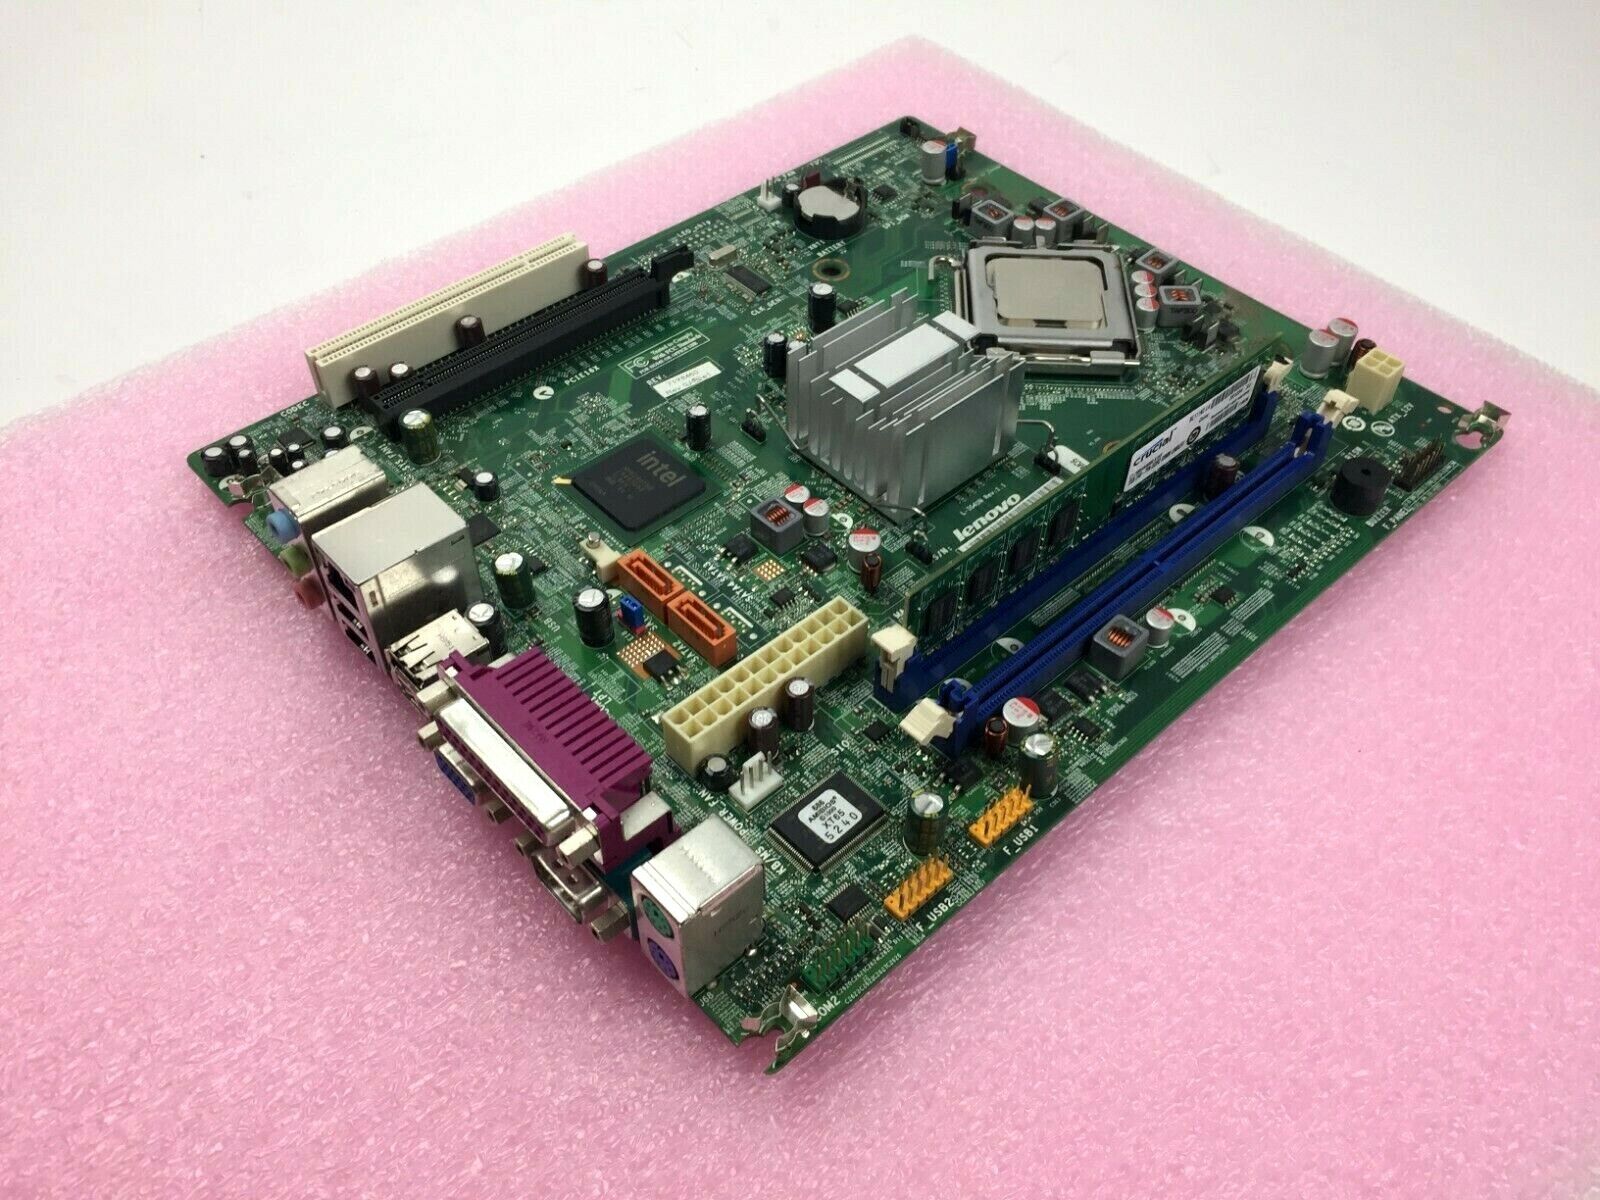 Infineon L-IG41N (Lenovo 71Y8460) Motherboard Intel Celeron 2.40GHz 2GB RAM DDR2